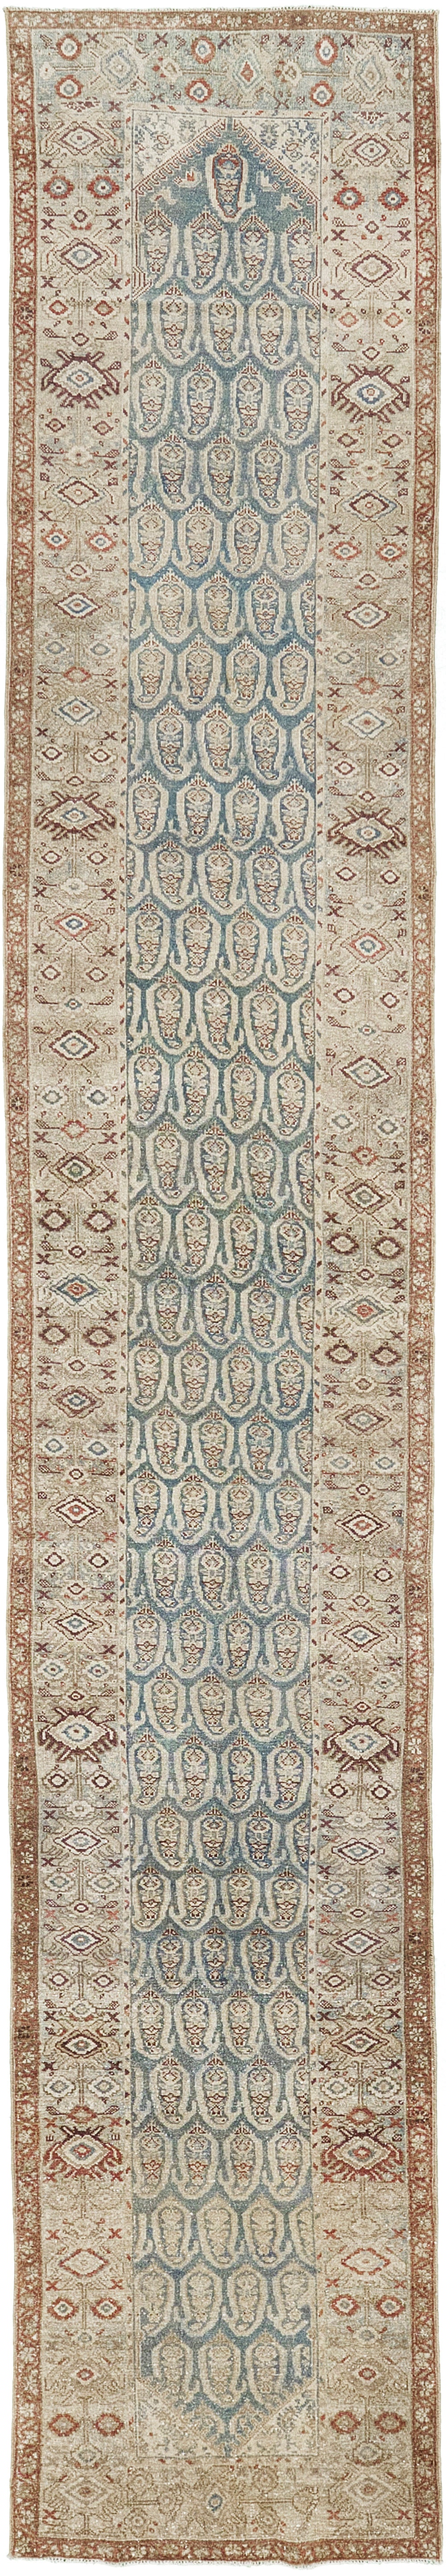 Antique Persian Malayer 30315